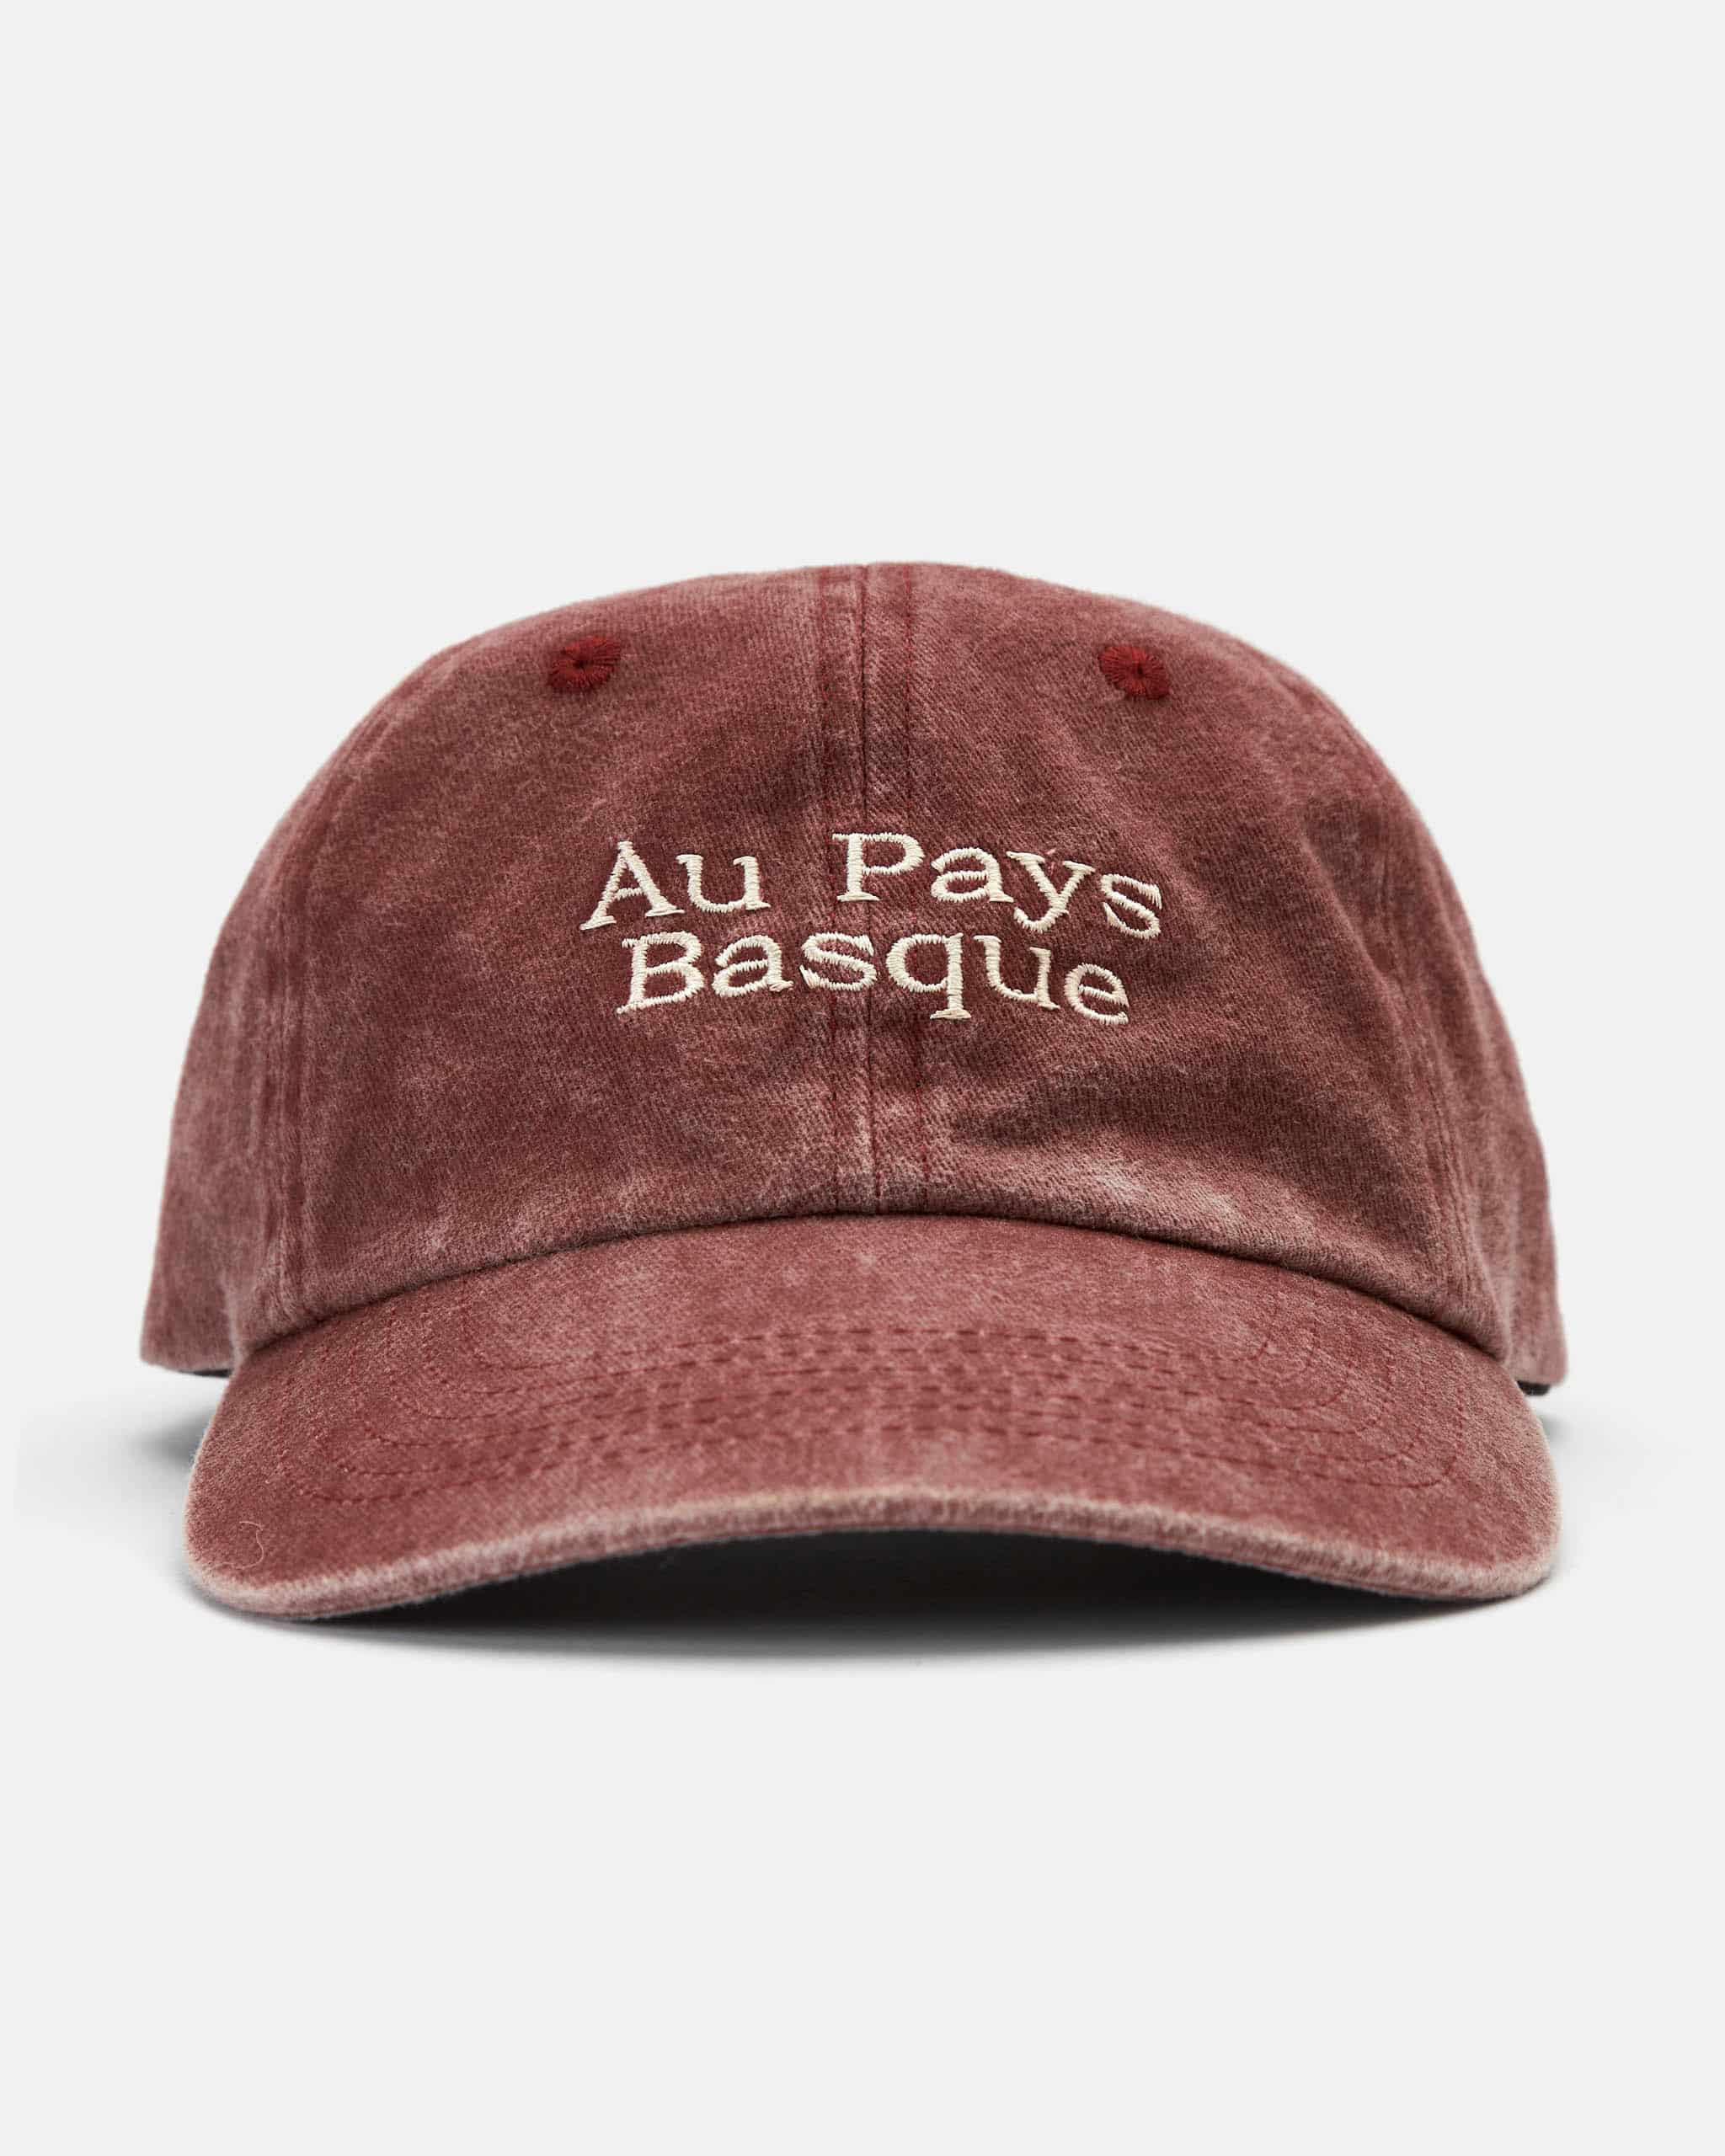 Travelogue 'Au Pays Basque' limited cap burgundy image 1